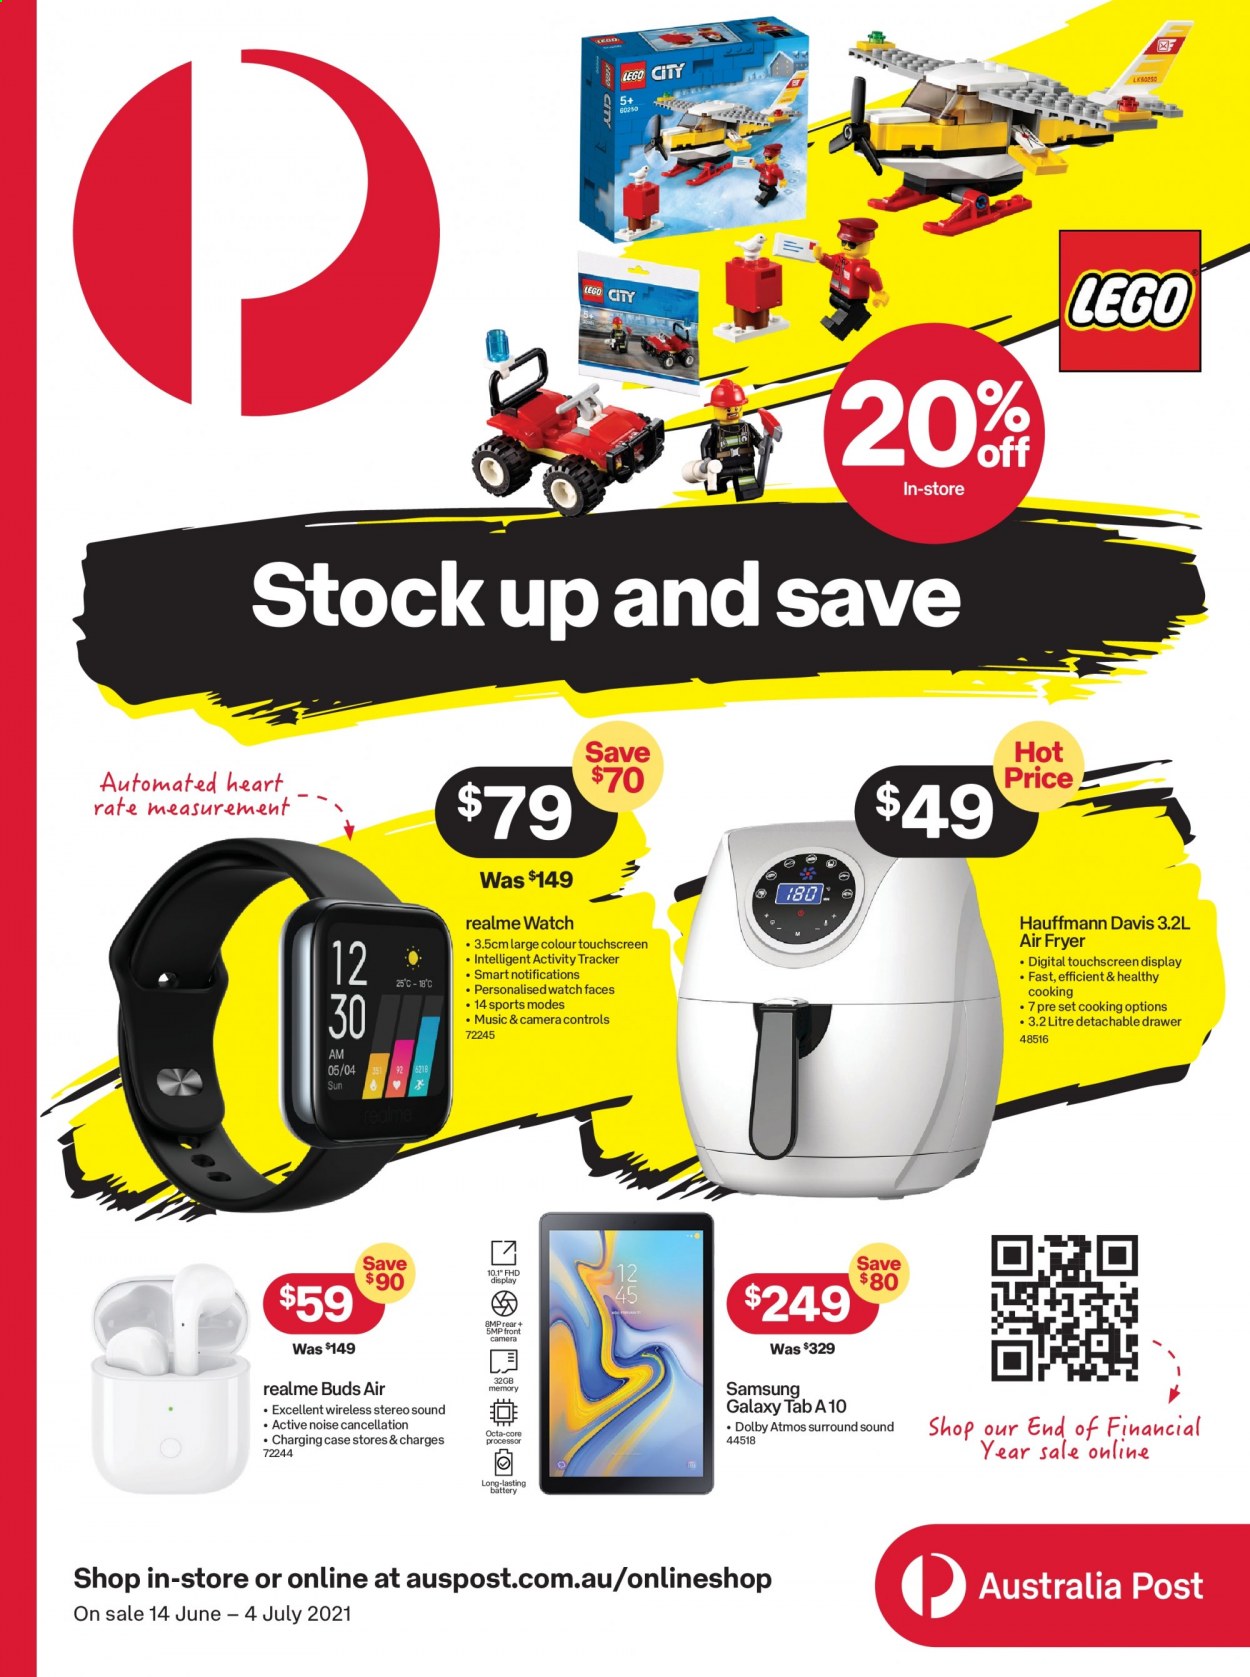 thumbnail - Australia Post Catalogue - 14 Jun 2021 - 4 Jul 2021 - Sales products - Samsung Galaxy, Samsung Galaxy Tab, battery, Samsung, Realme, activity tracker, air fryer, LEGO, LEGO City. Page 1.